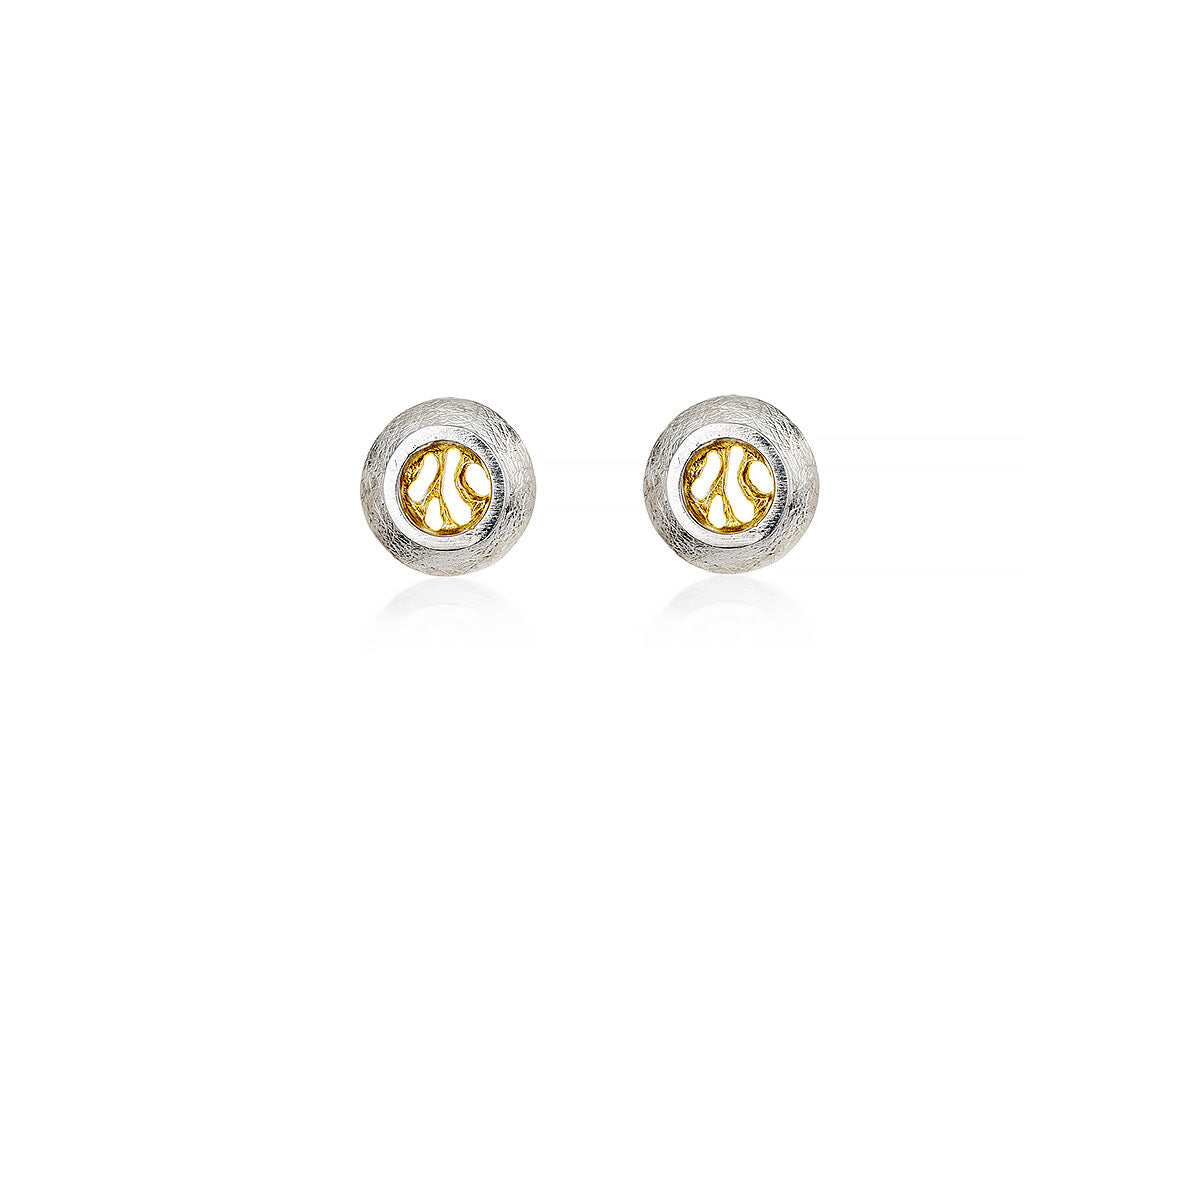 Woven With 18ct Yellow Gold Vermeil Silver Earrings - Stud - Garrett Mallon Jewellery